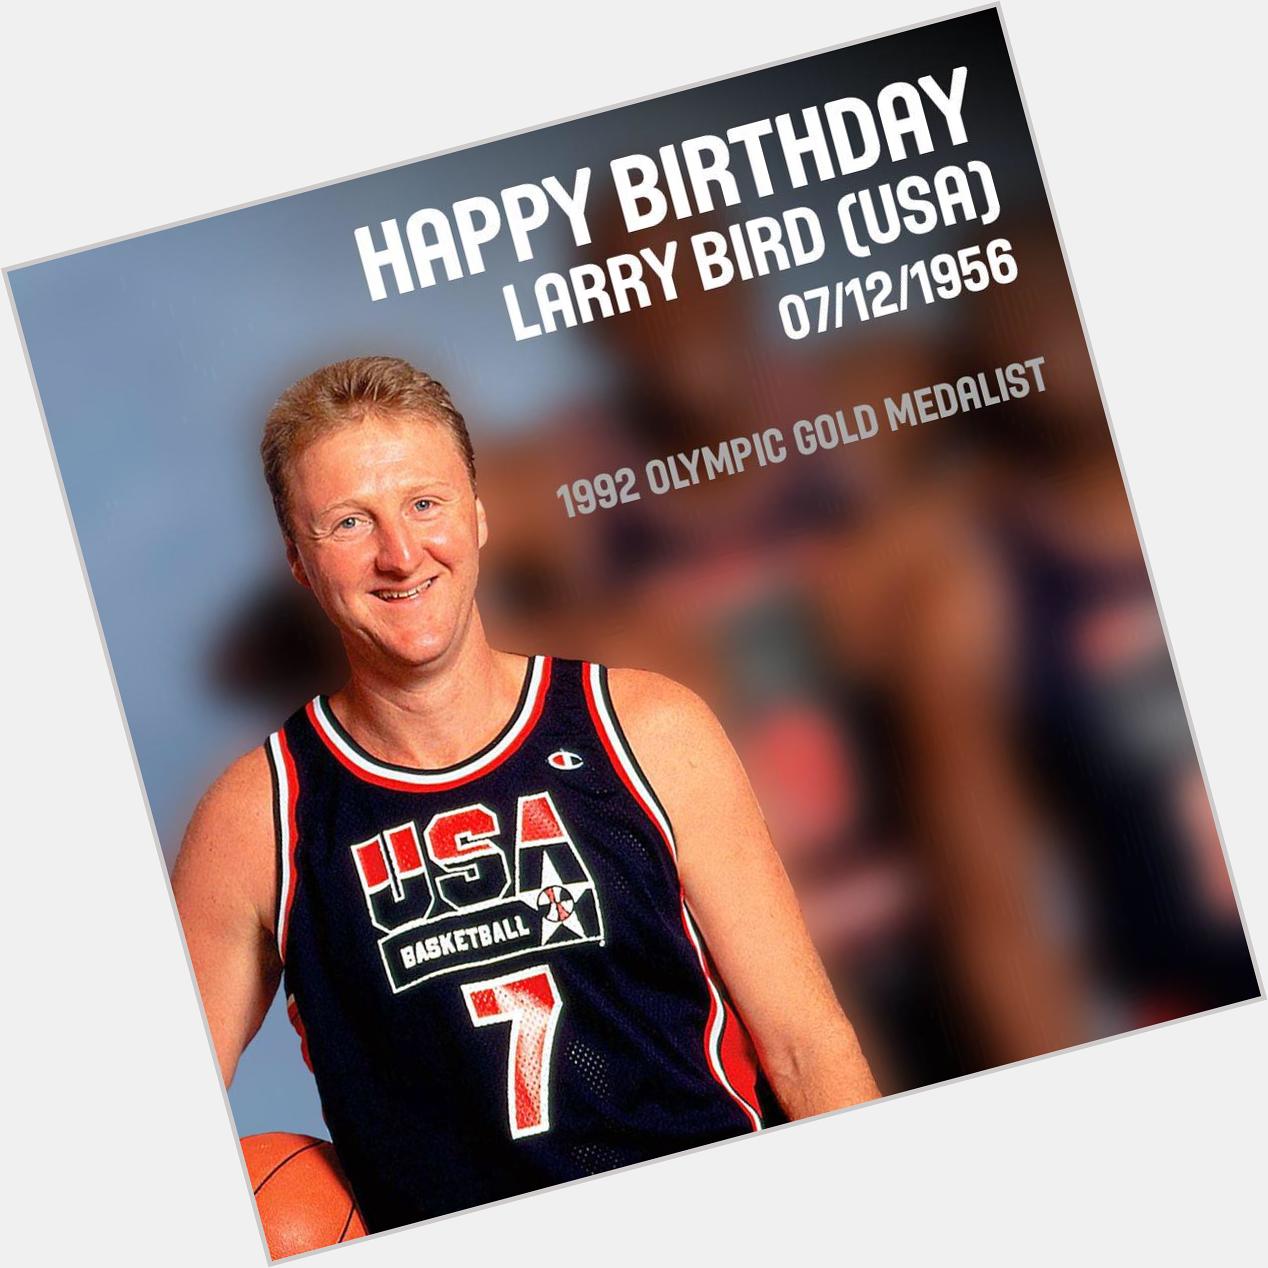 Happy Birthday Larry Bird! Boston legend & member of the 92 gold medal Dream Team. 